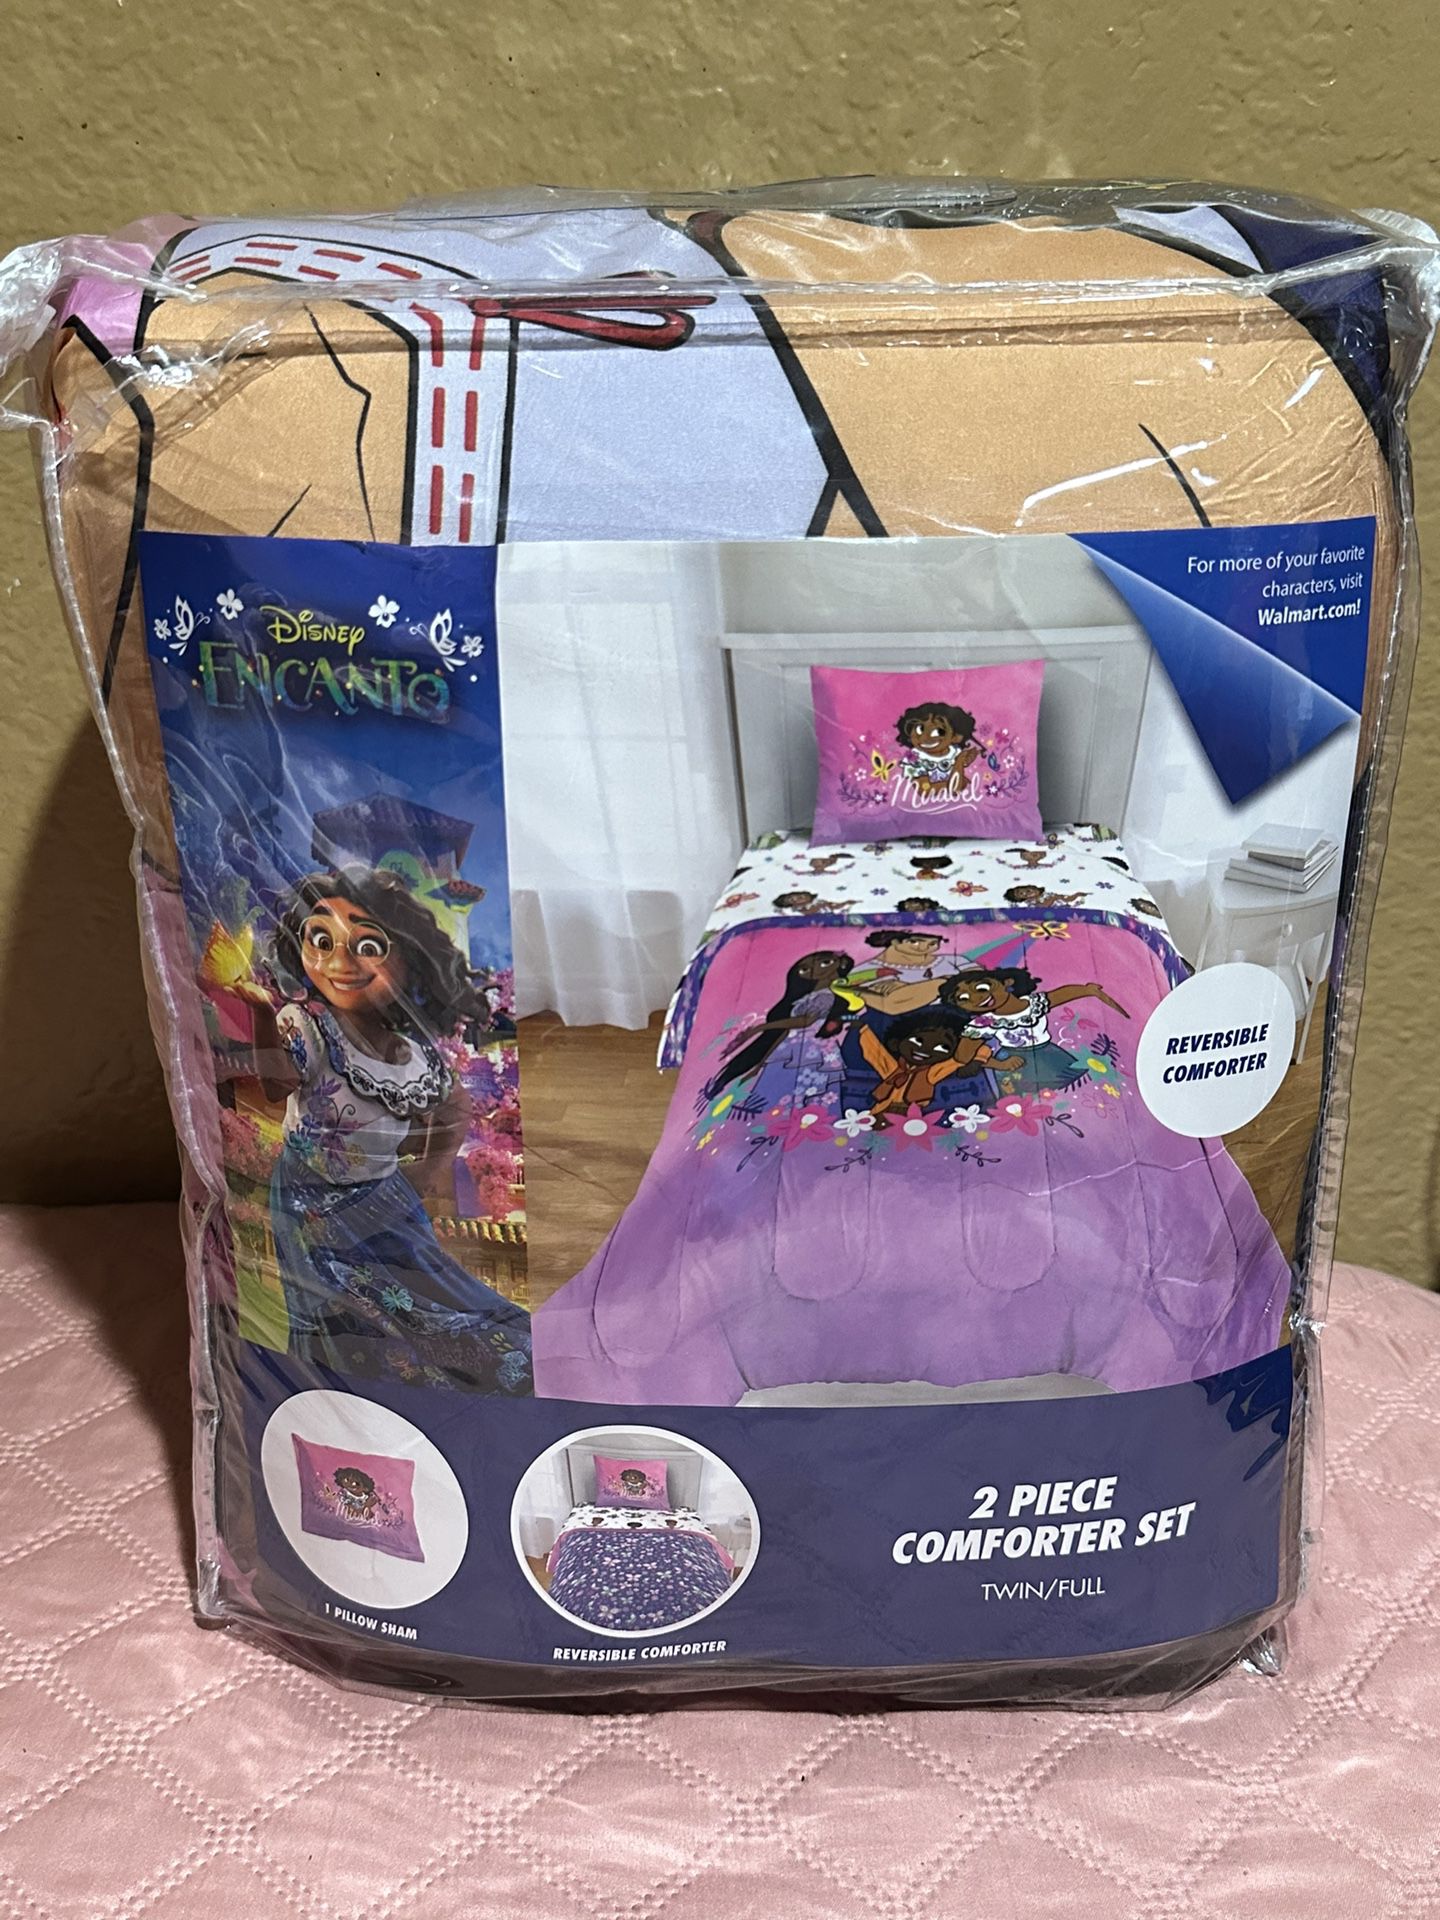 Disney Encanto Sz Full 2 Piece Comforter Set $20 New